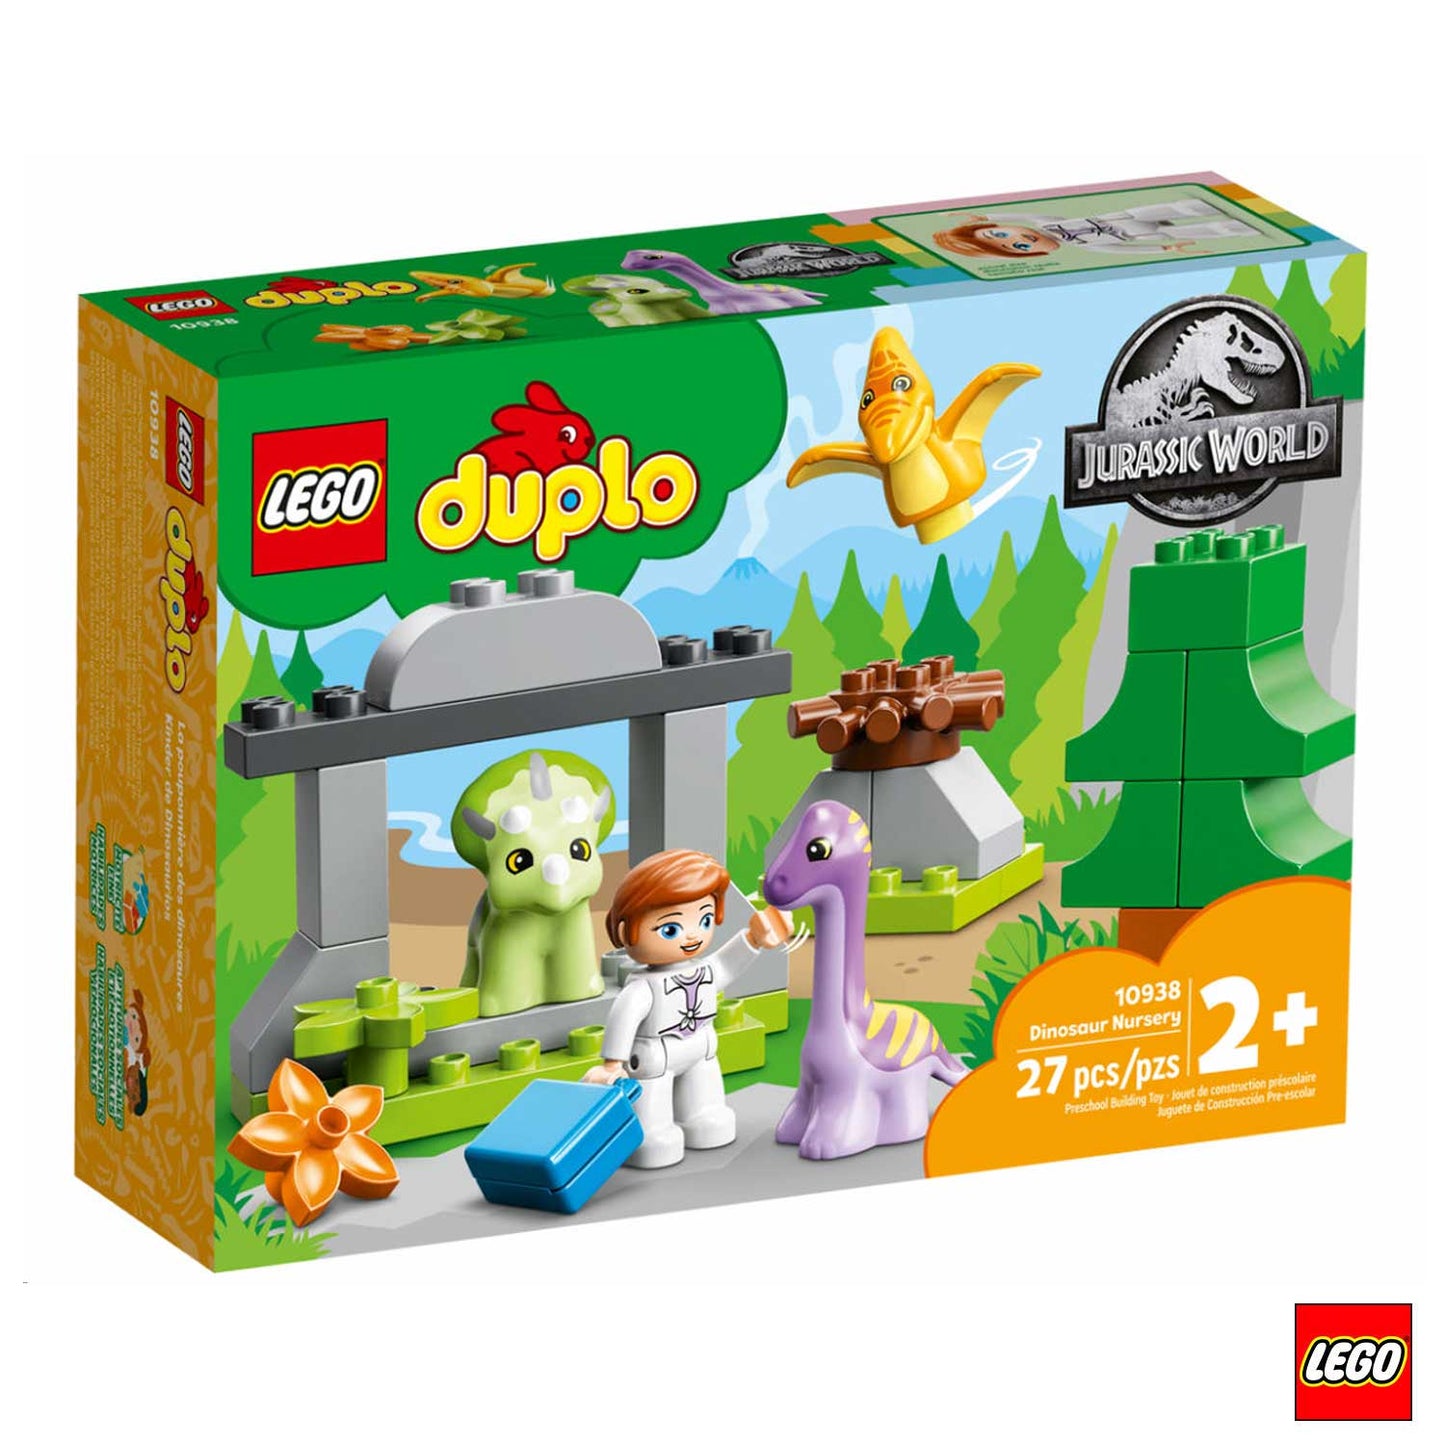 Lego - Duplo Jurassic World L'asilo Nido Dei Dinosauri 10938